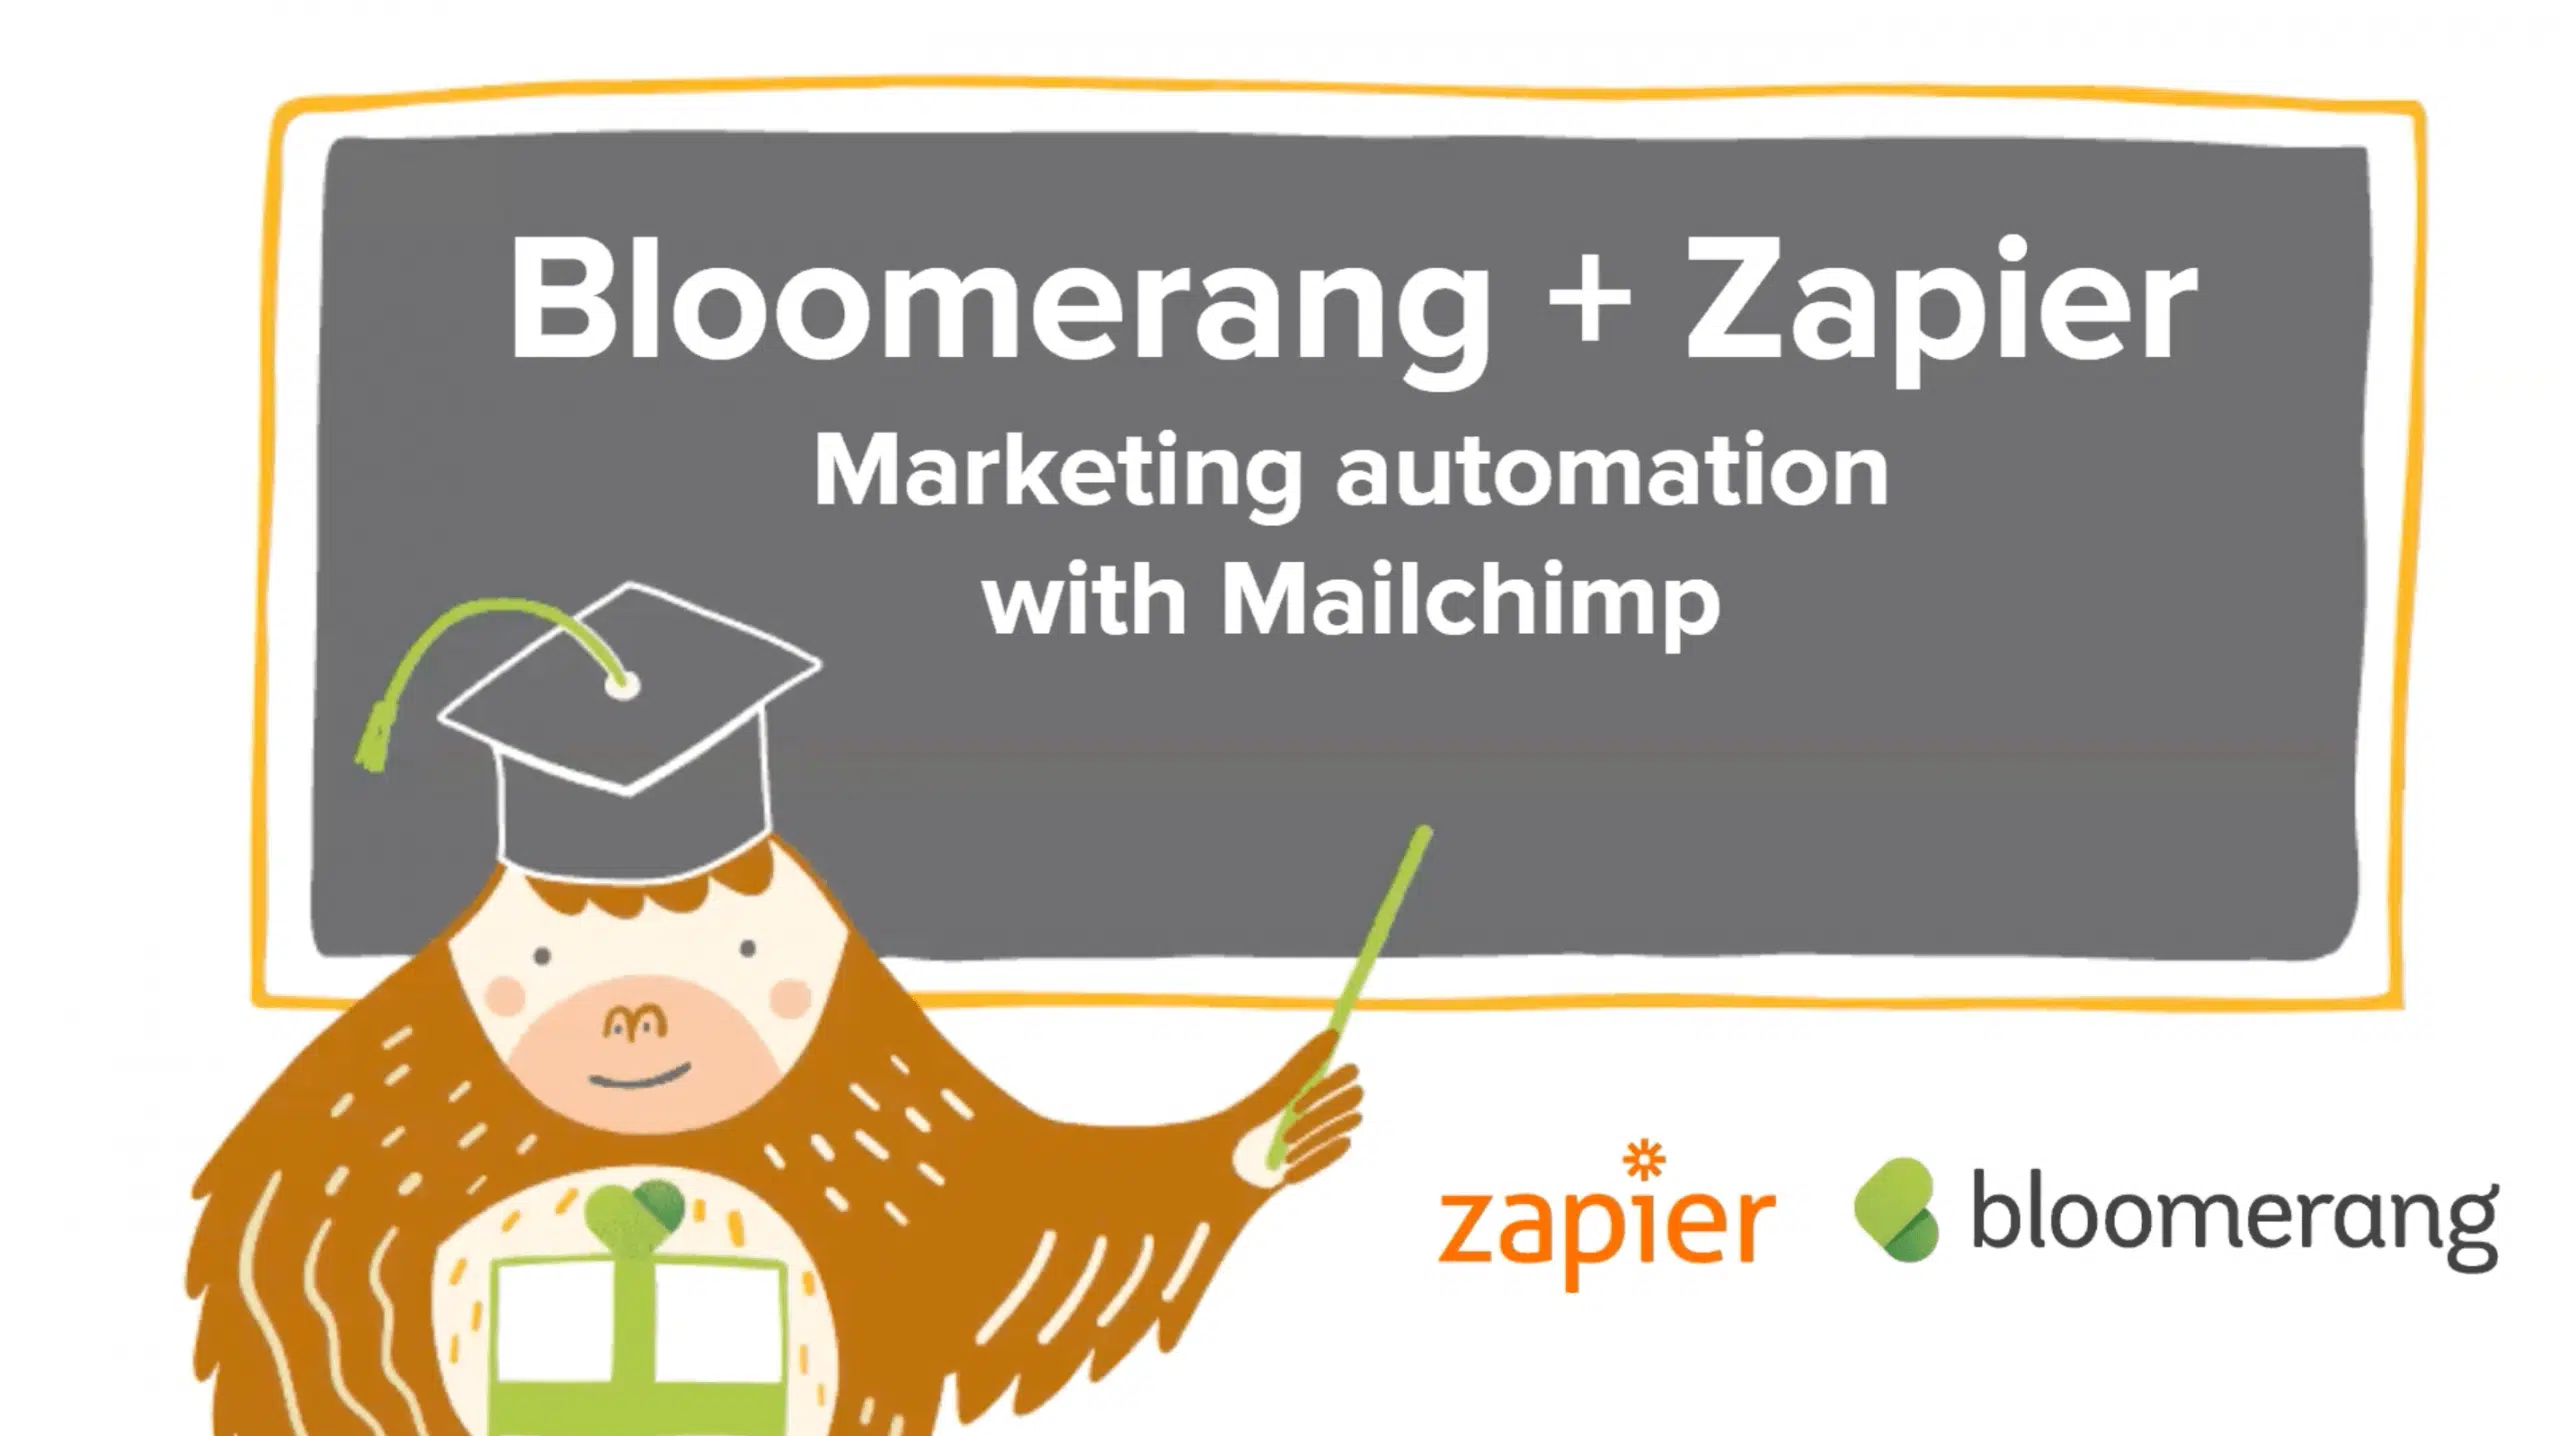 Bloomerang Zapier and Mailchimp